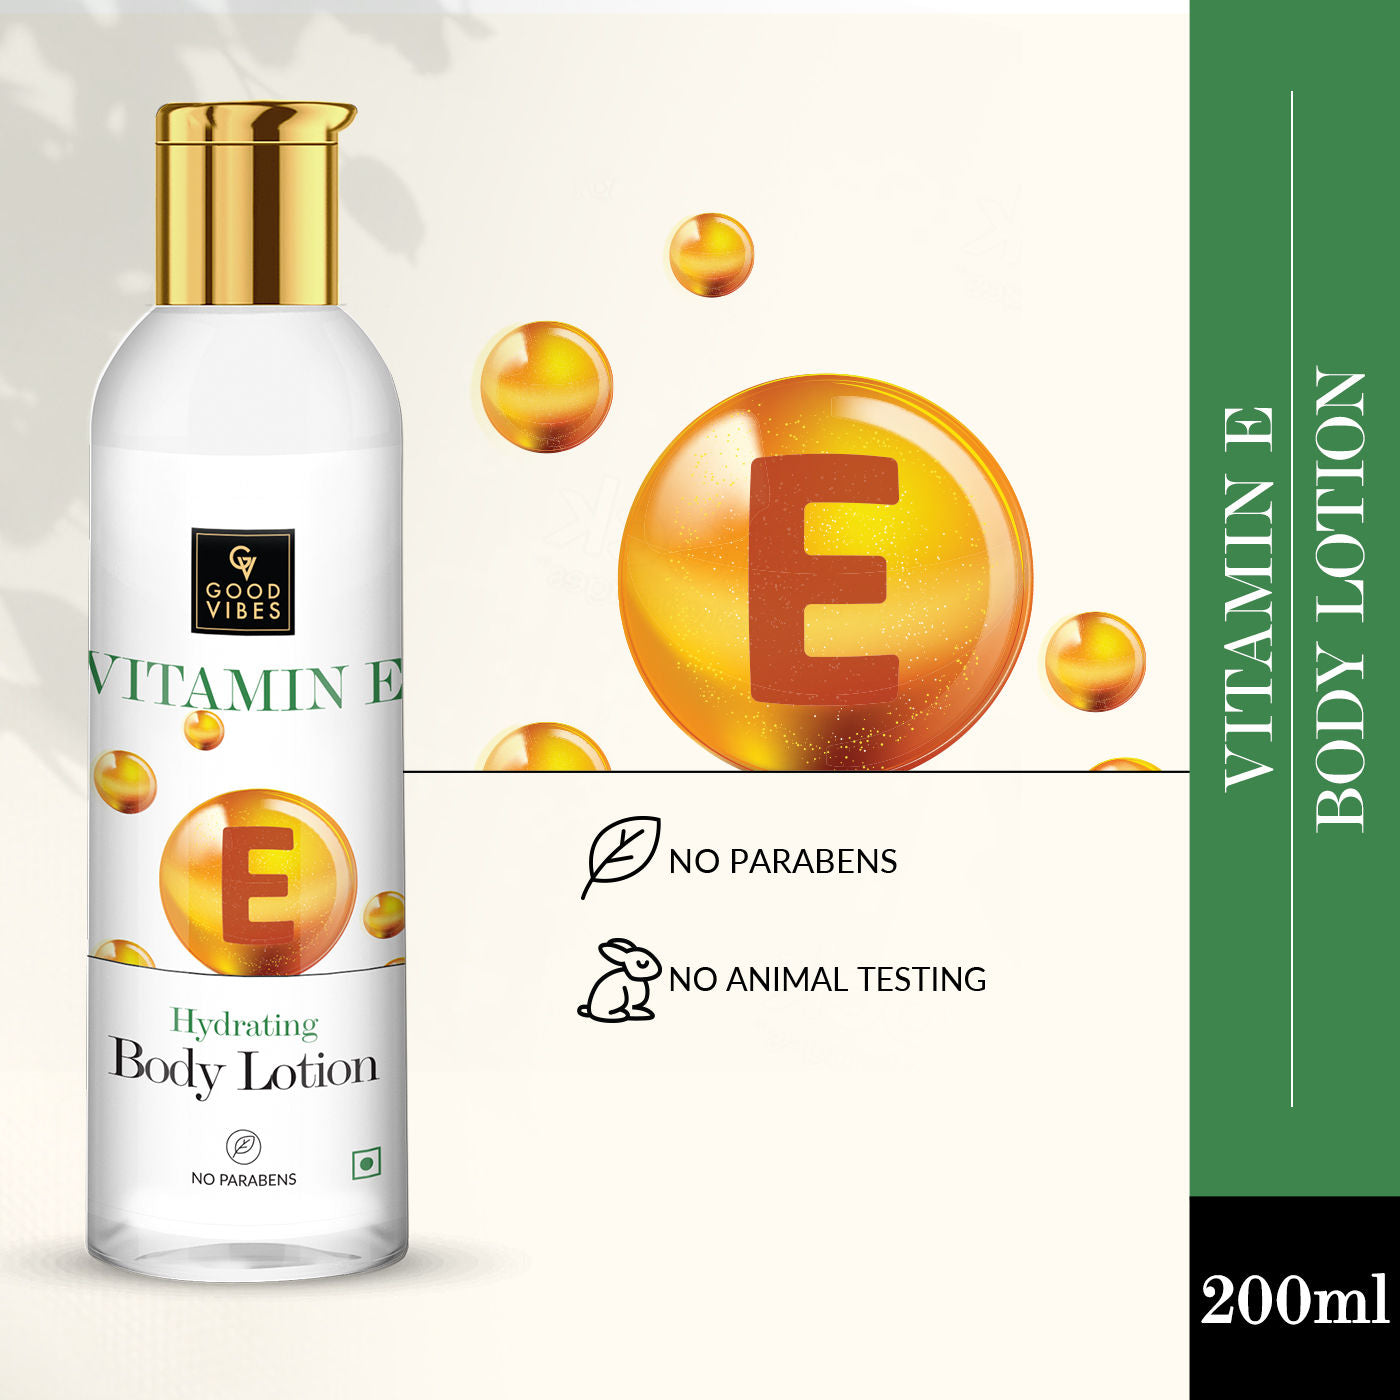 good-vibes-hydrating-body-lotion-vitamin-e-200-ml-2-18-19-2